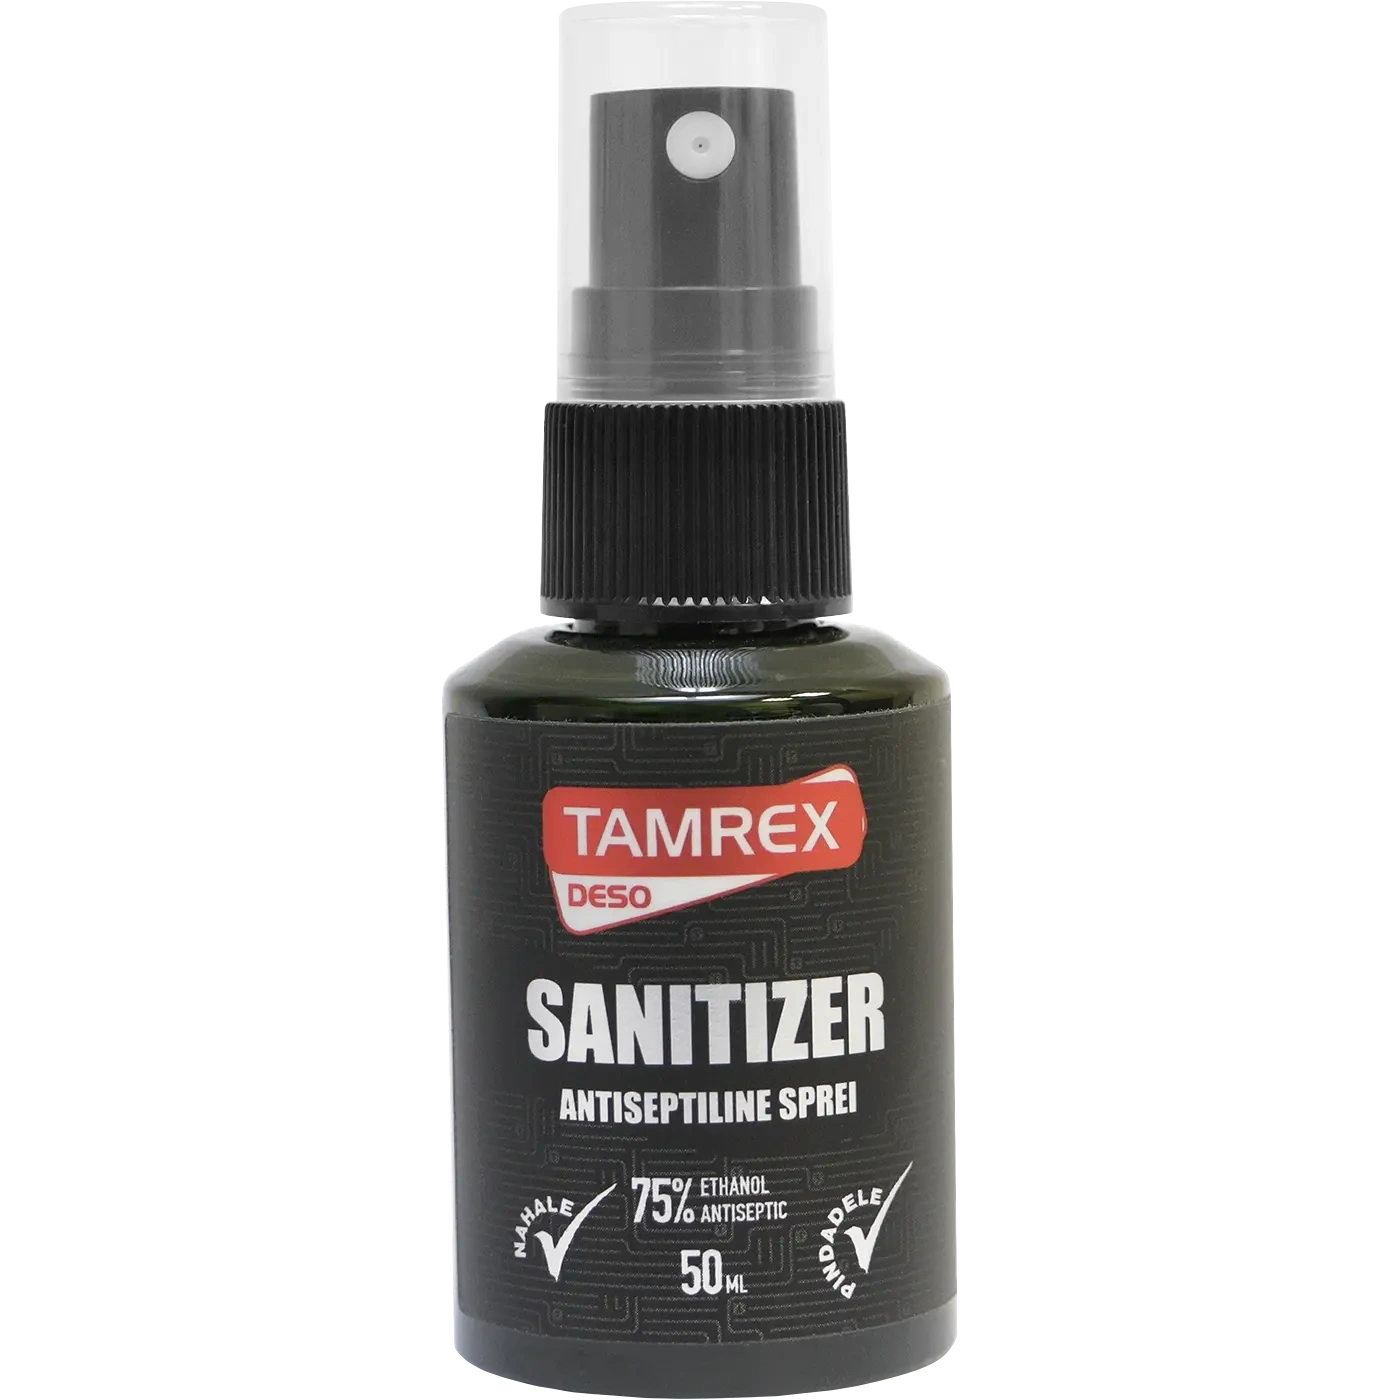 TAMREX Sanitizer antiseptiline sprei 50 ml